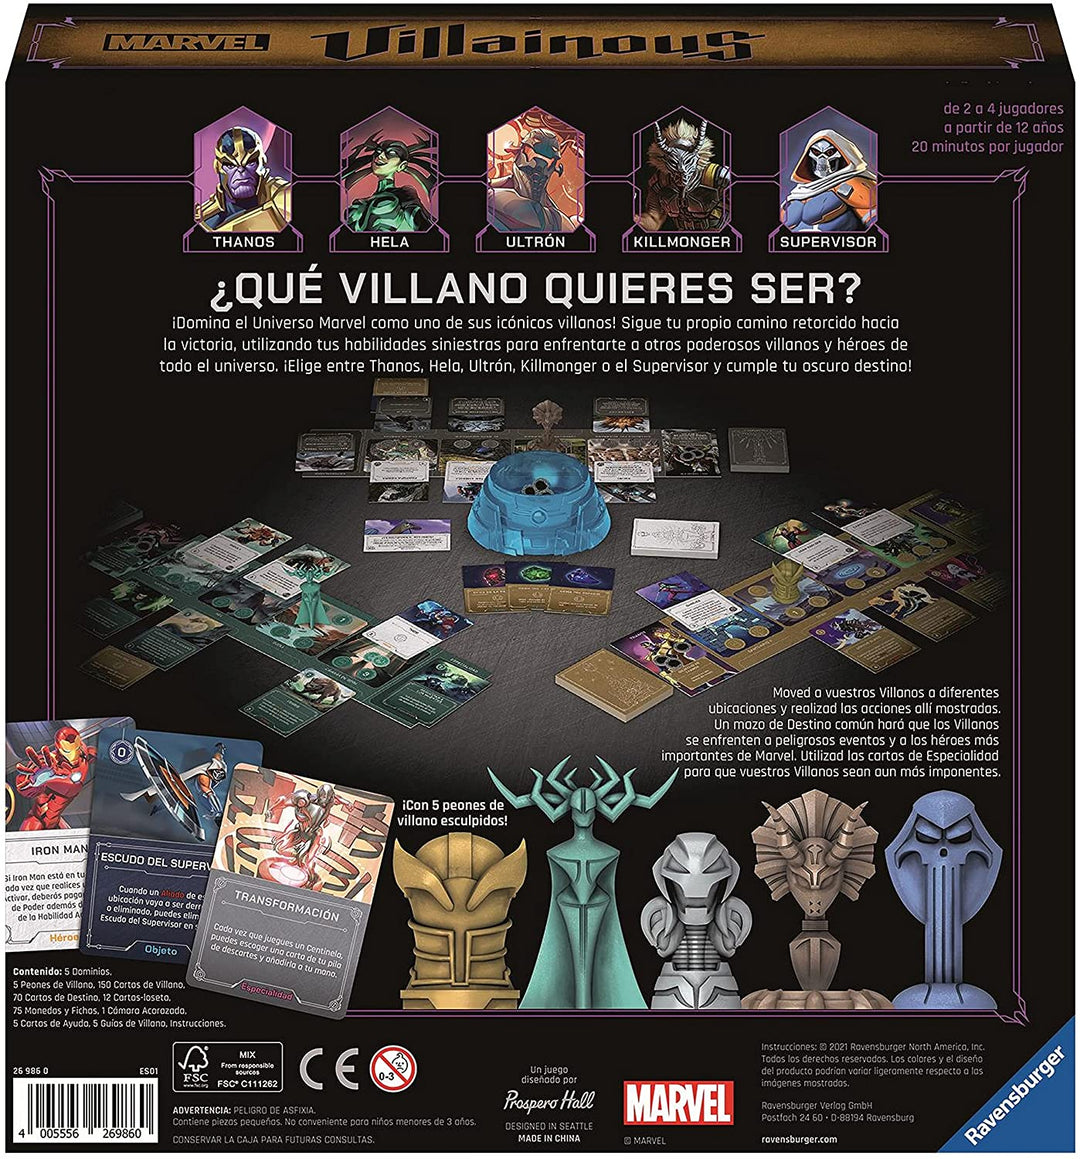 Ravensburger 269860, Villainous Marvel, spanische Version, Light Strategy und Fami